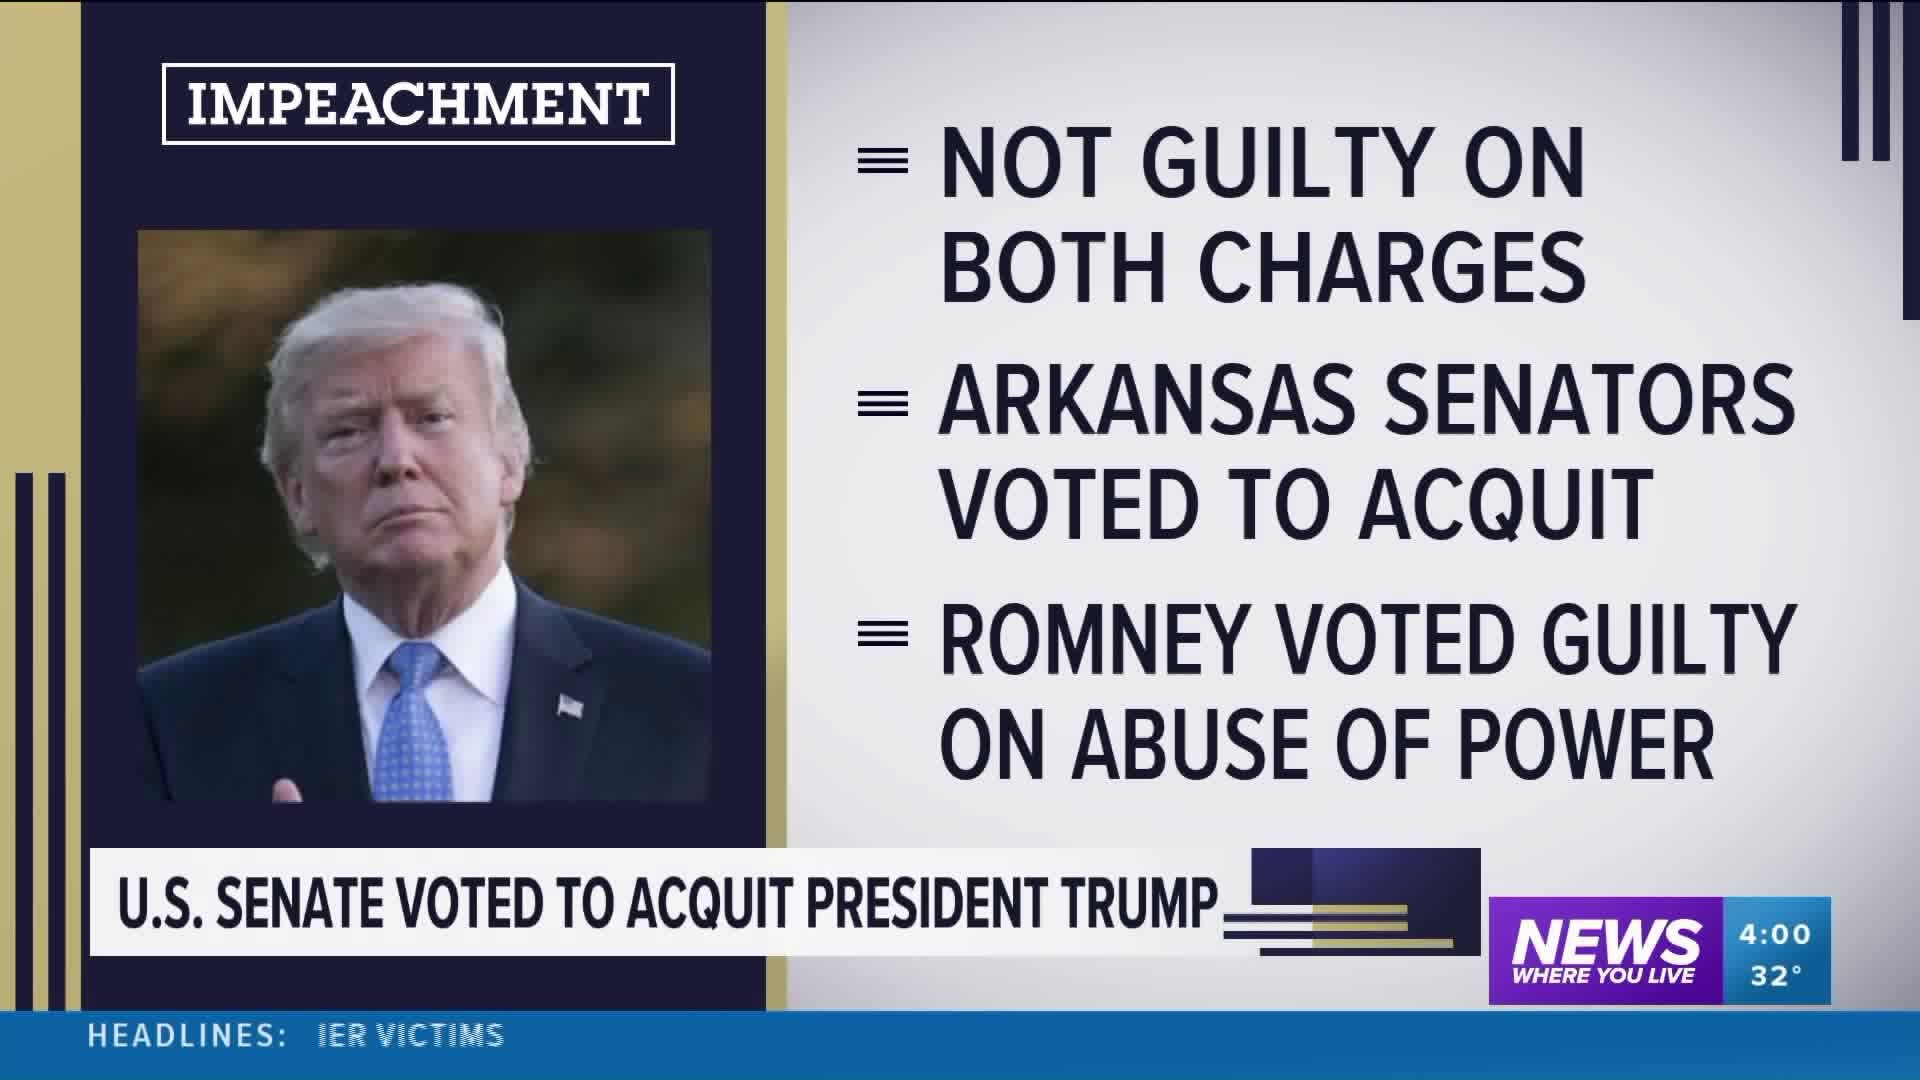 Senate Votes To Acquit President Trump On Both Articles Of Impeachment